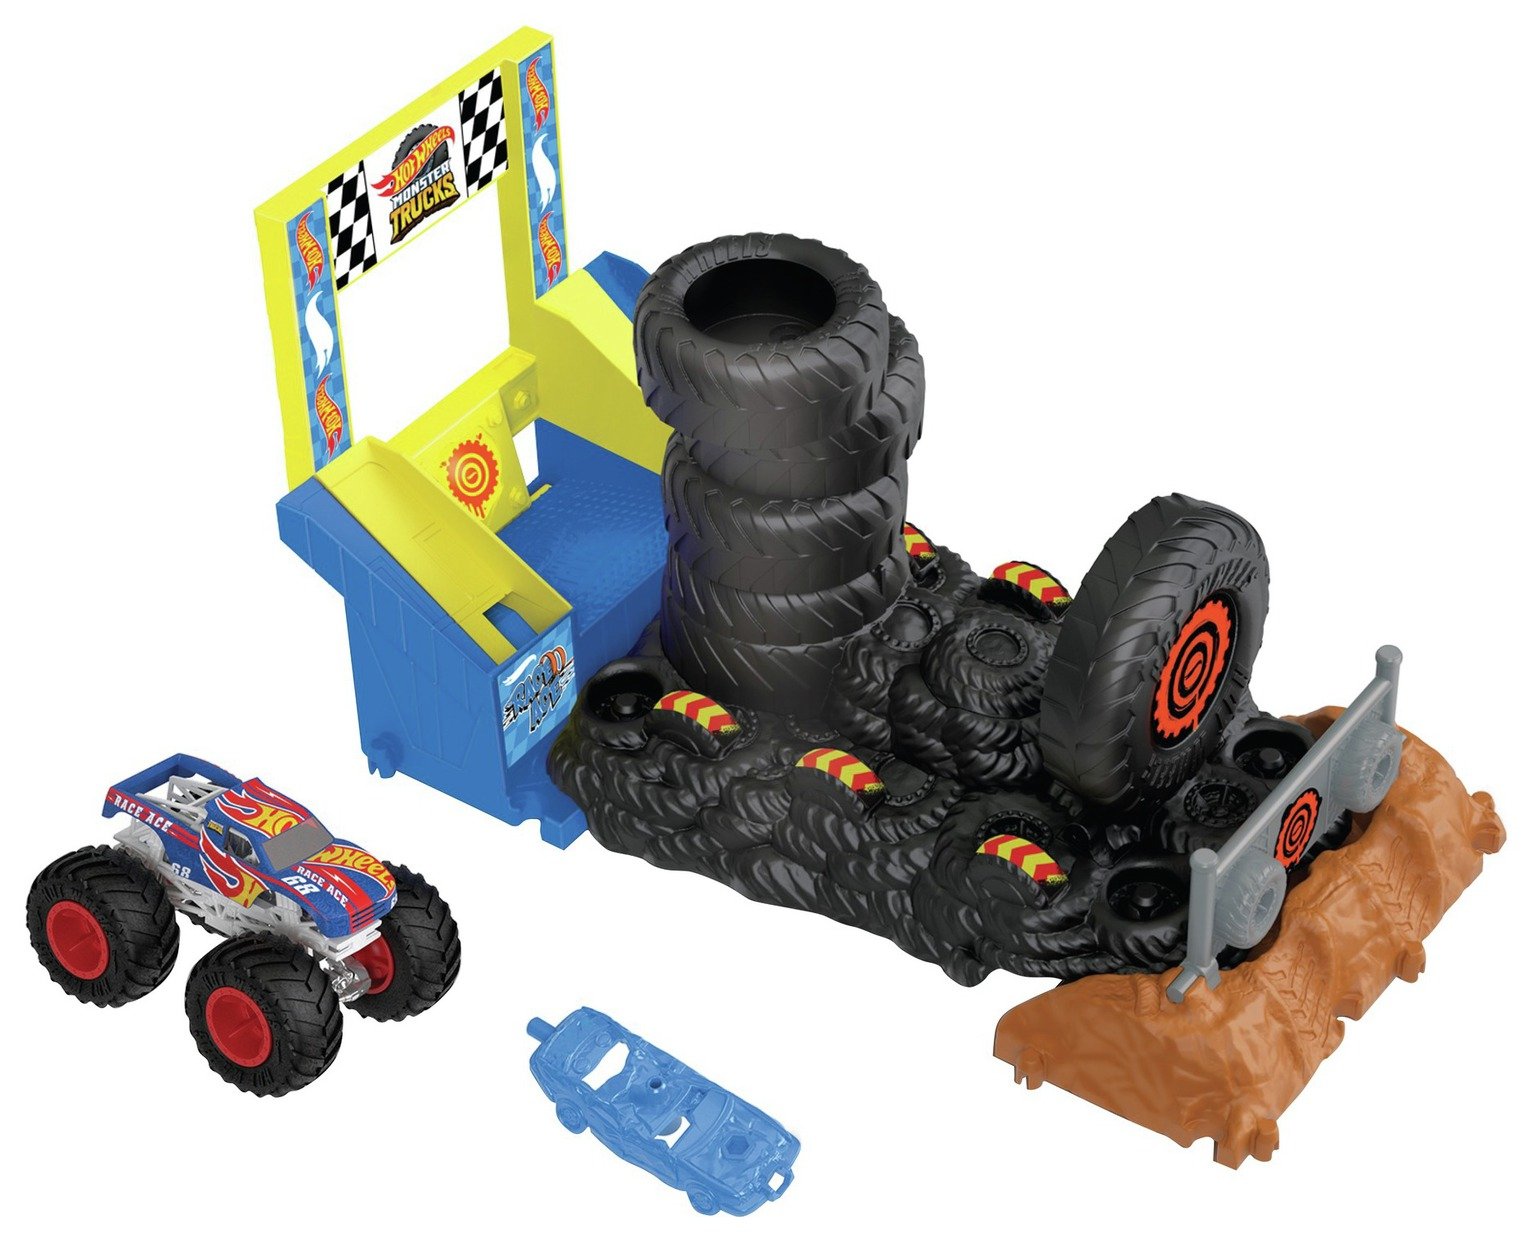 Hot Wheels Monster Trucks Smash Race Challenge Playset review